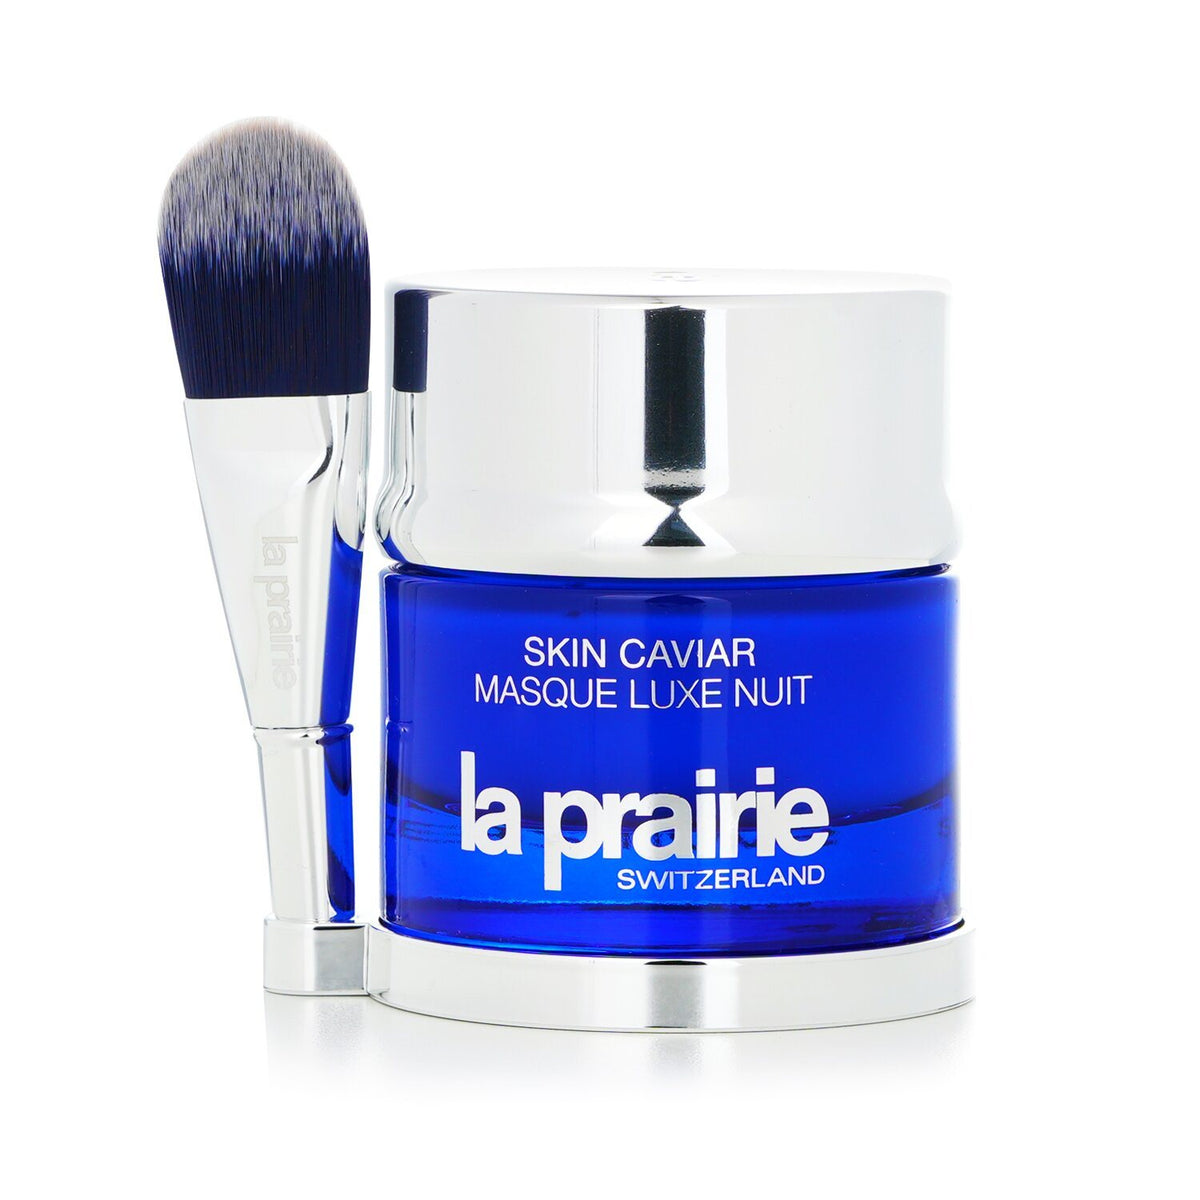 LA PRAIRIE - Skin Caviar Luxe Sleep Mask 085663 50ml/1.7oz - Premium Moisturizer from Doba - Just $313! Shop now at Ida Louise Boutique